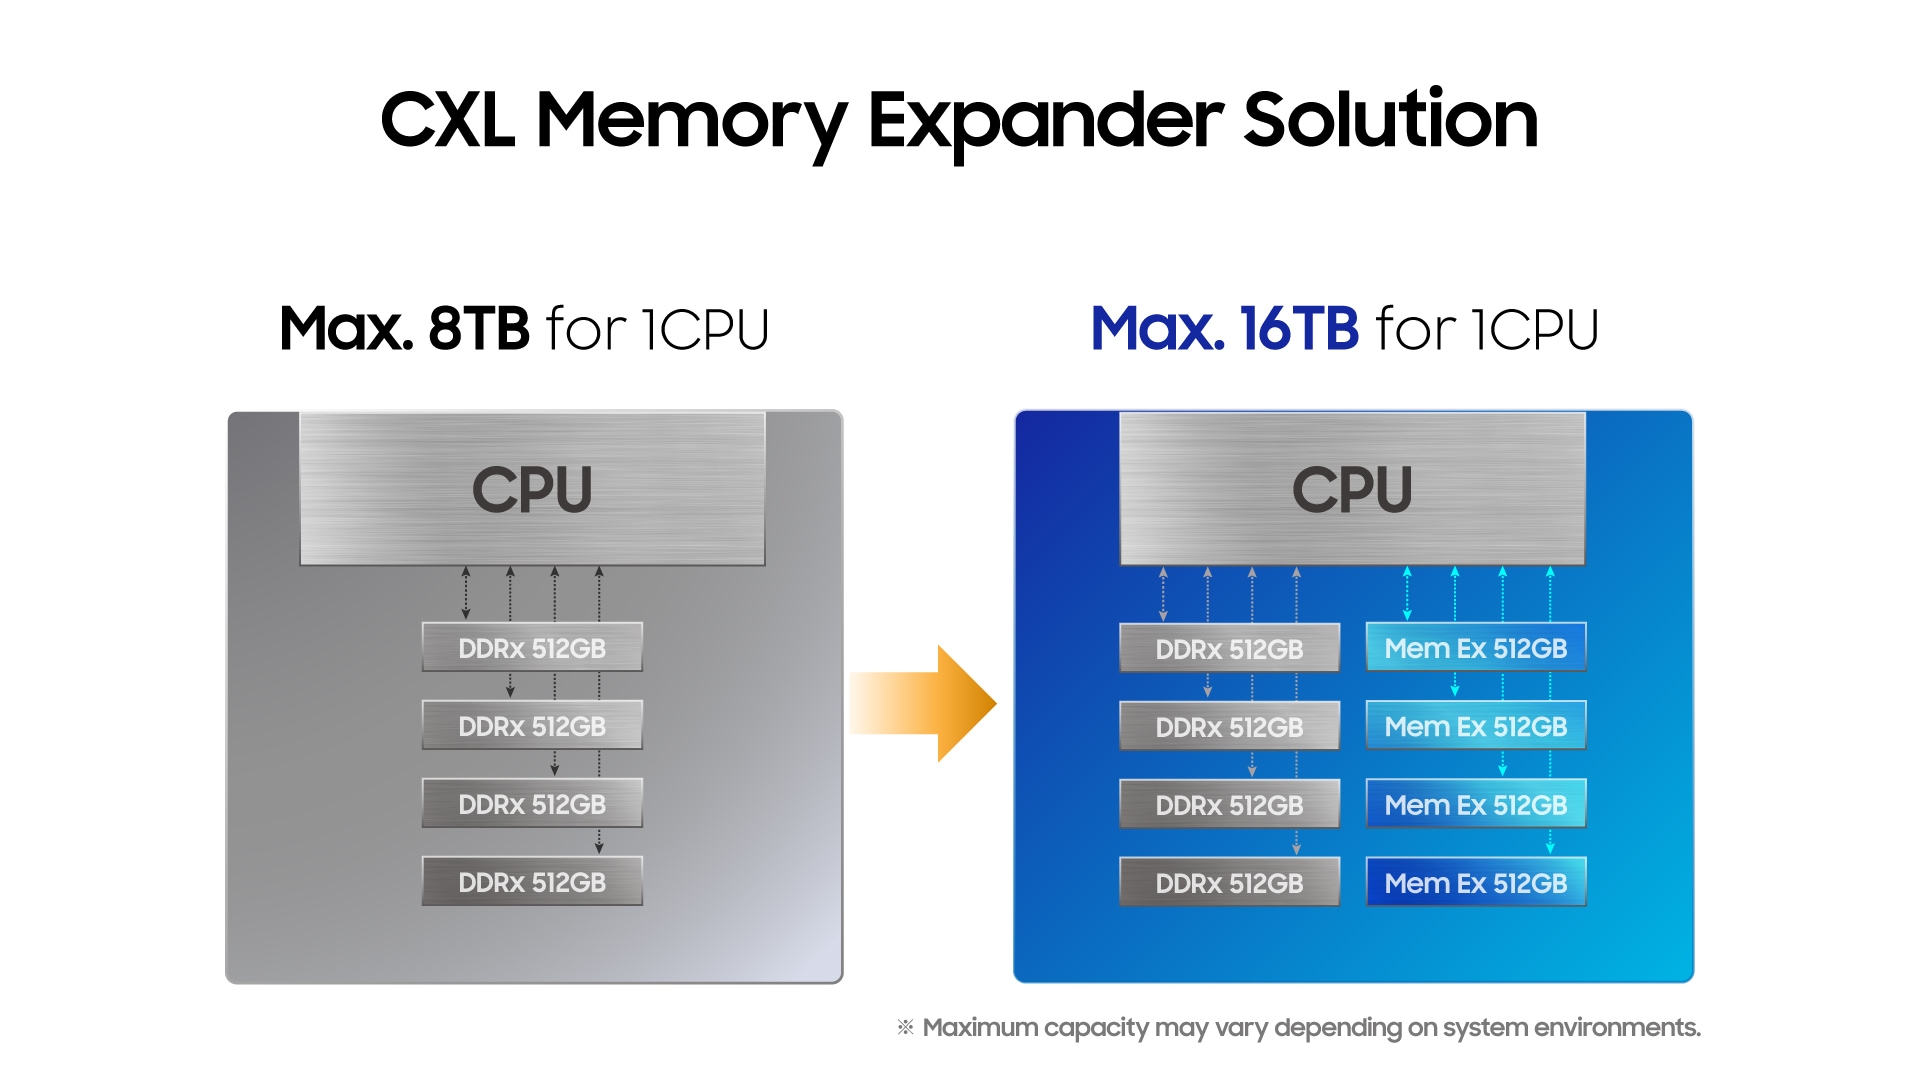 Samsung's Memory-Semantic CXL SSD Brings a 20X Performance Uplift